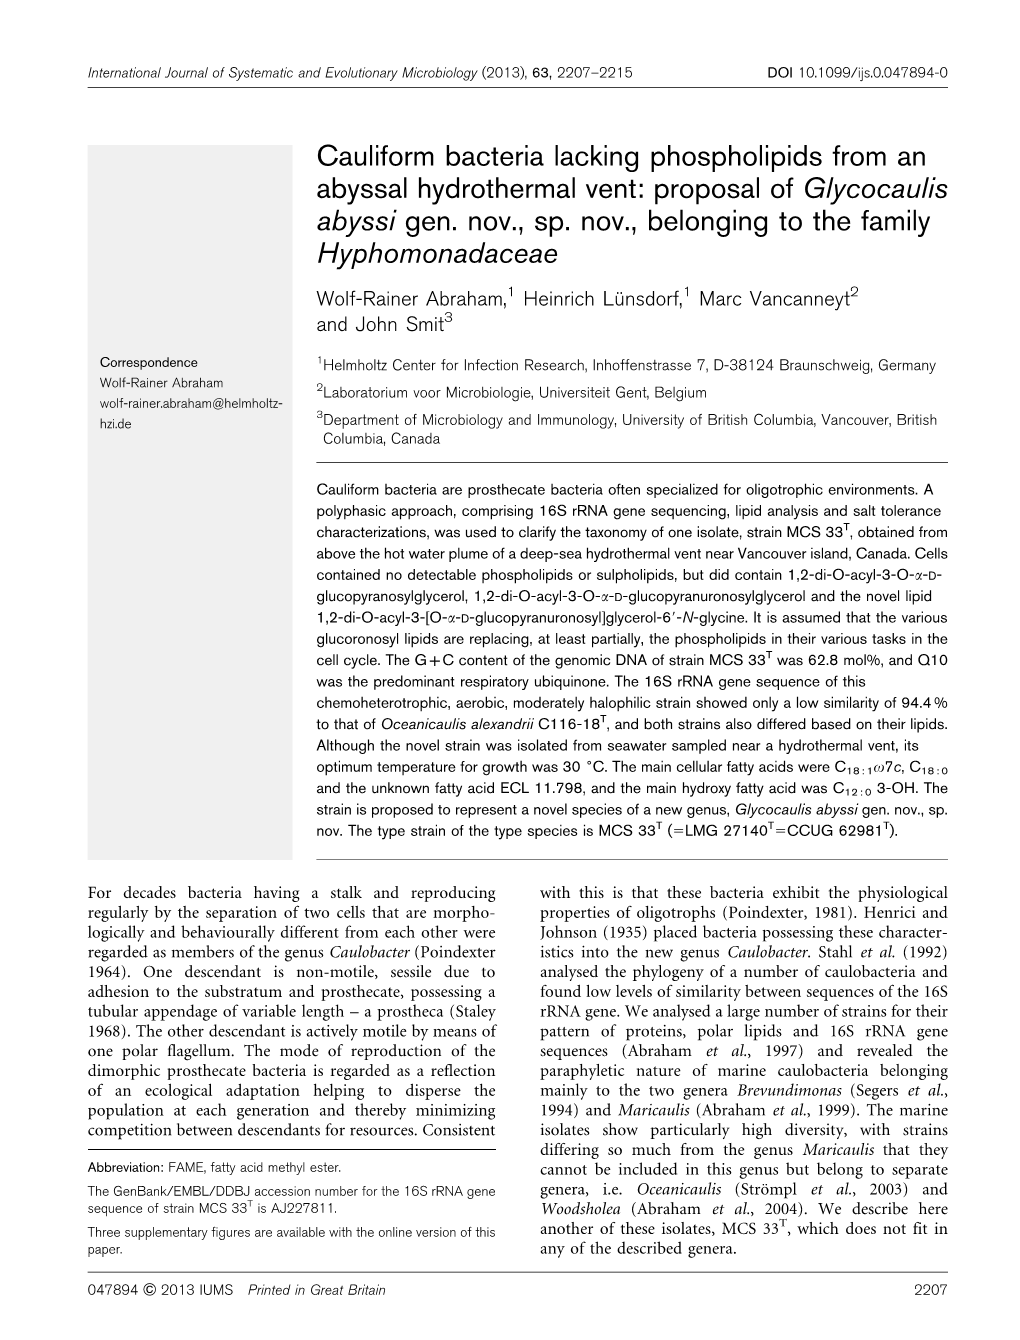 Proposal of Glycocaulis Abyssi Gen. Nov., Sp. Nov., Belonging to the Family Hyphomonadaceae